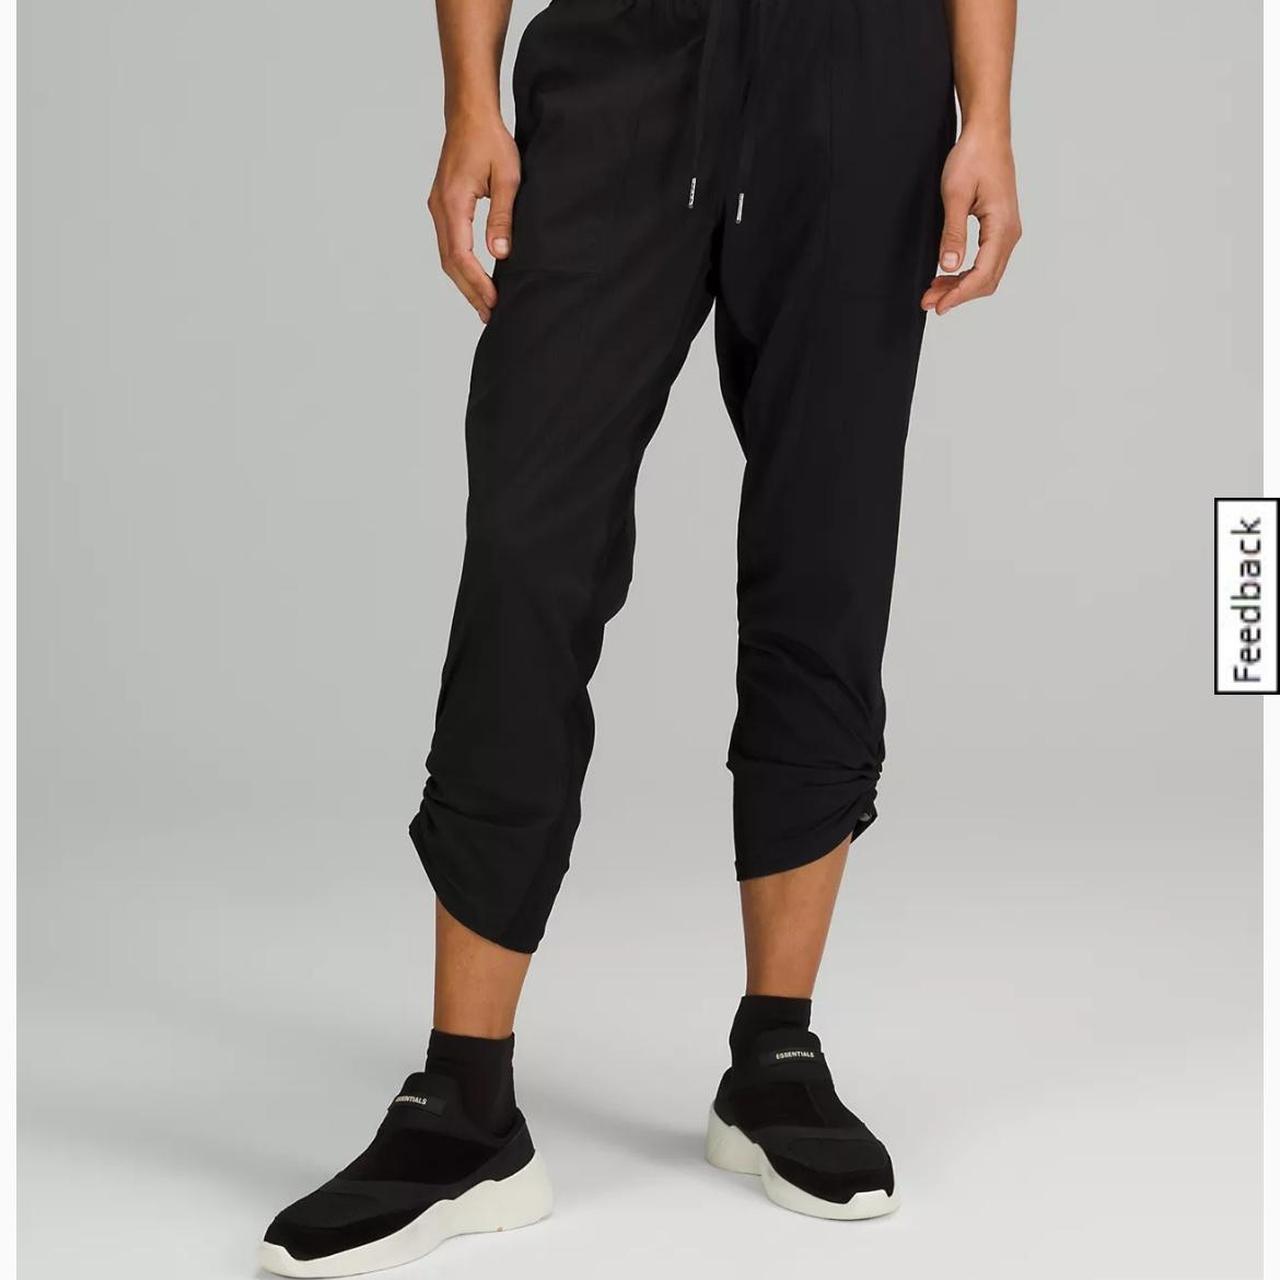 Black dance studio pants size 6 full - Depop